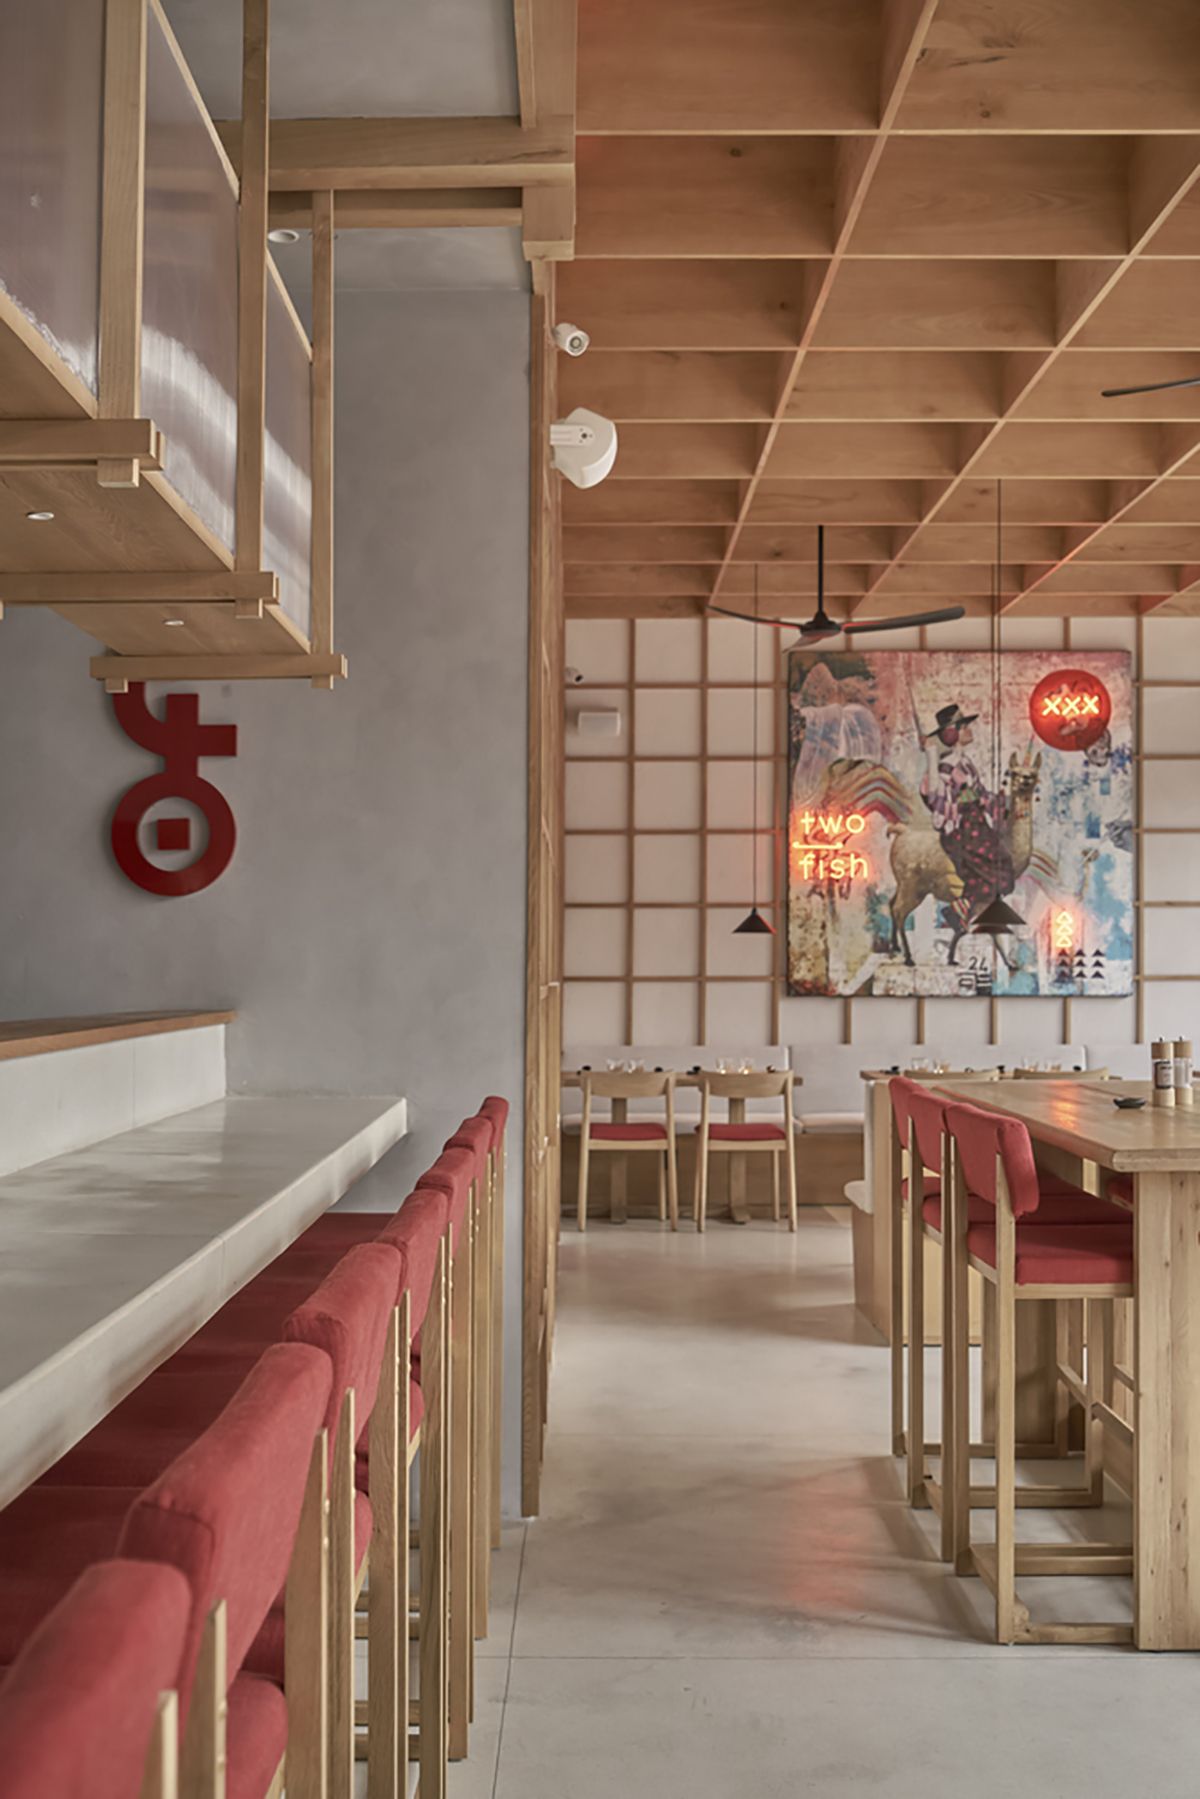 kienviet tinto nikkei cuisine and bar studioduo architecture 1 5